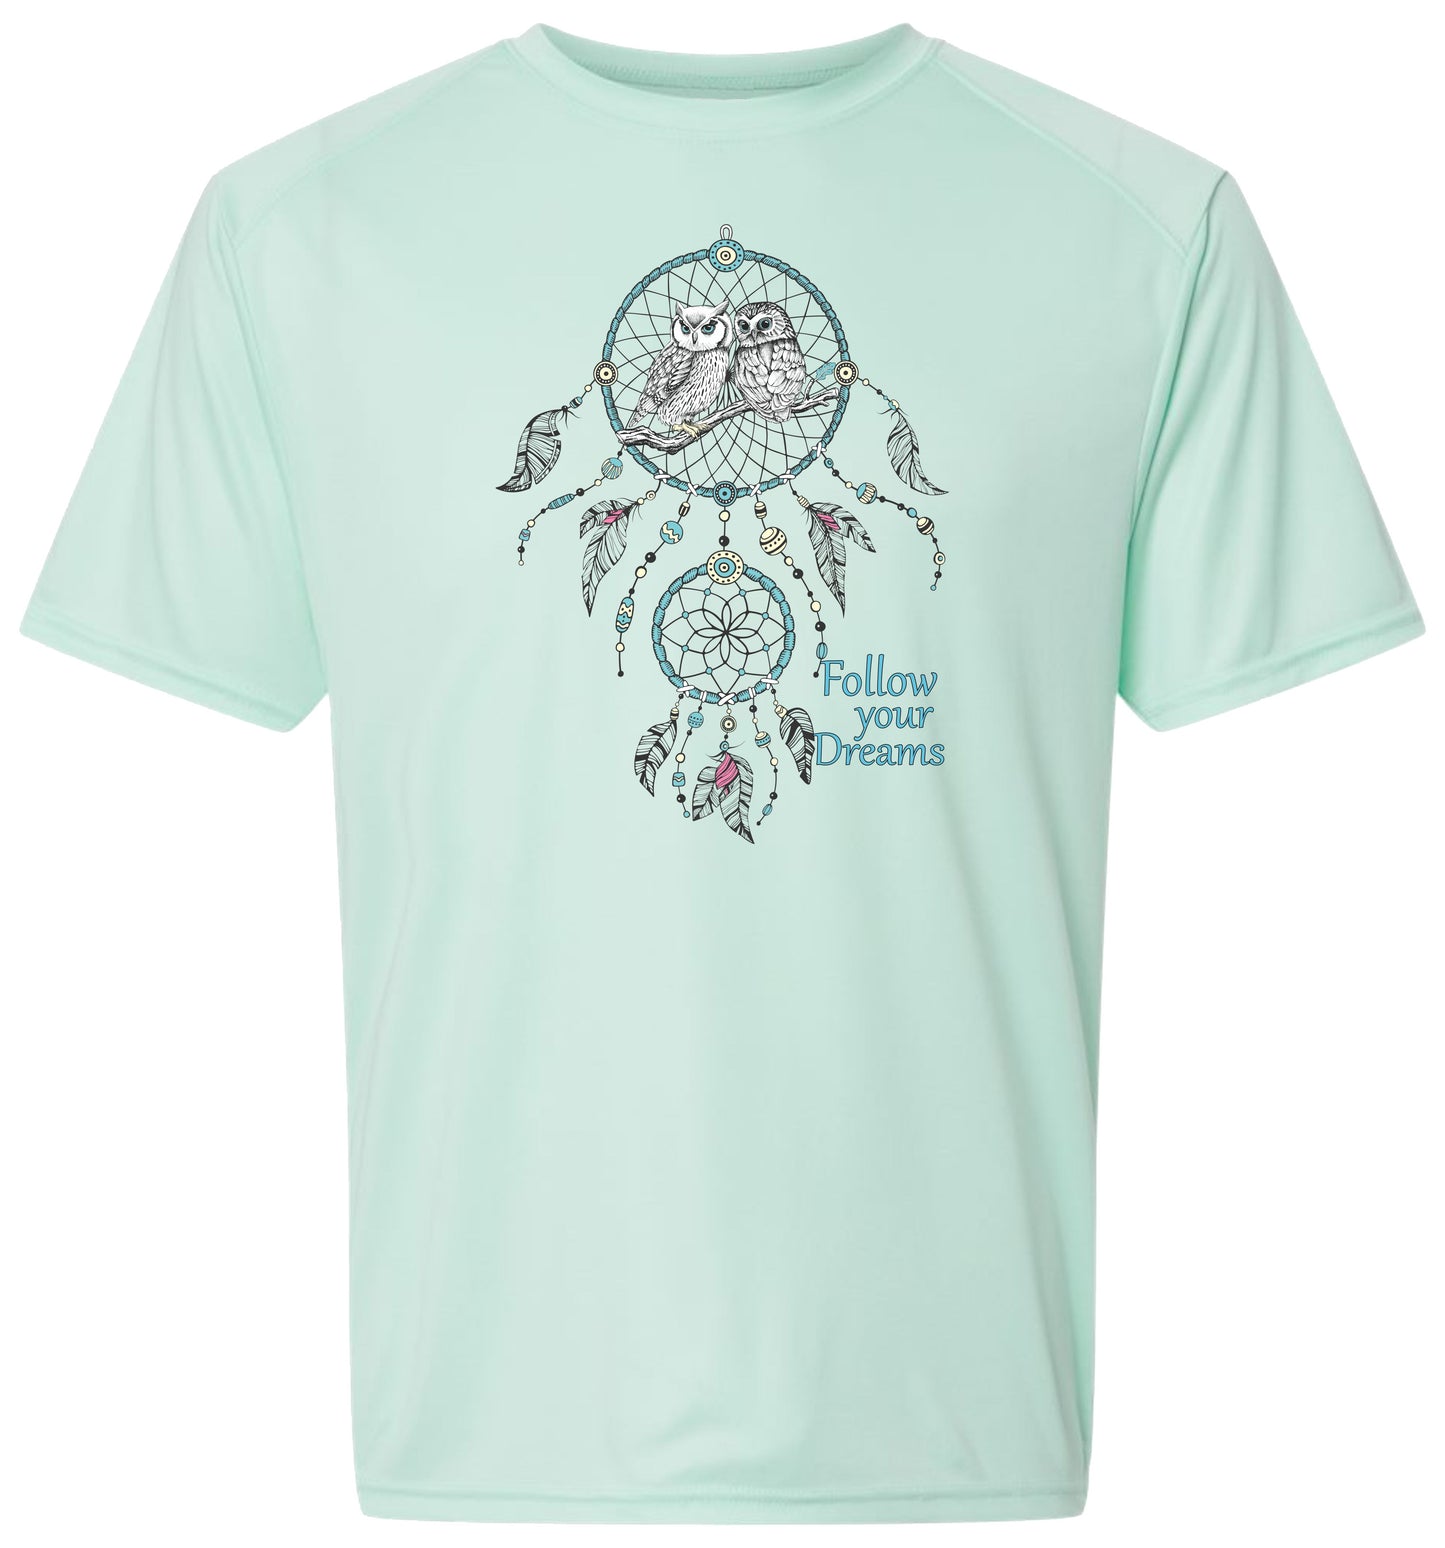 86 SW Follow Your Dreams Short Sleeve UPF 50+ Shirt Gardening Shirt Casual Shirt Outdoor Shirt Lake Shirt Beach Shirt